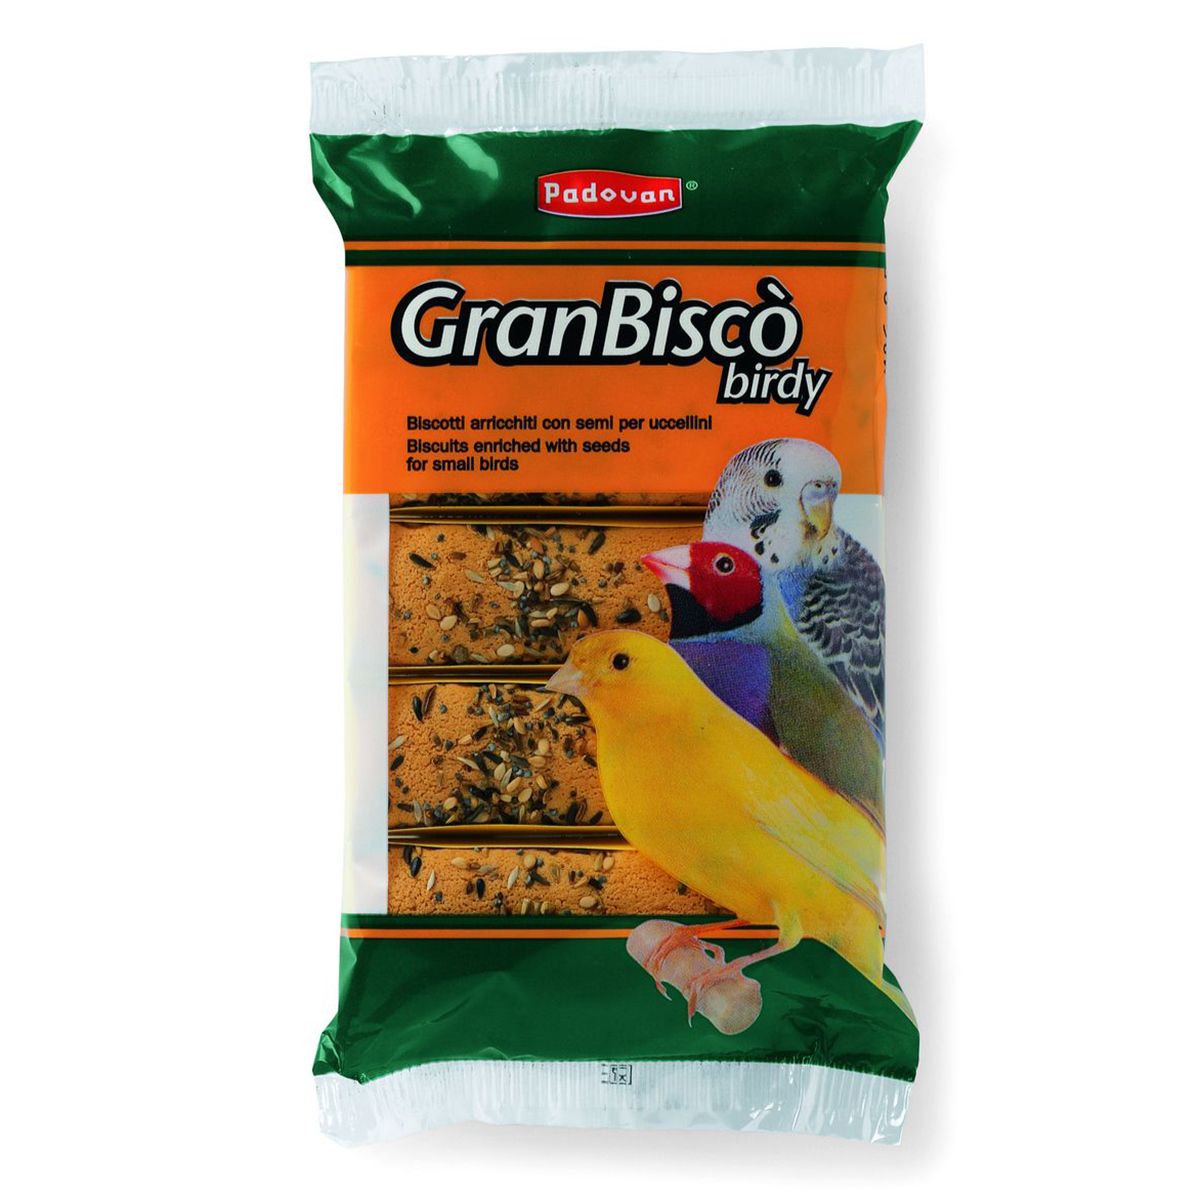 Granbisco Birdy, Padovan, 30 g Batoane